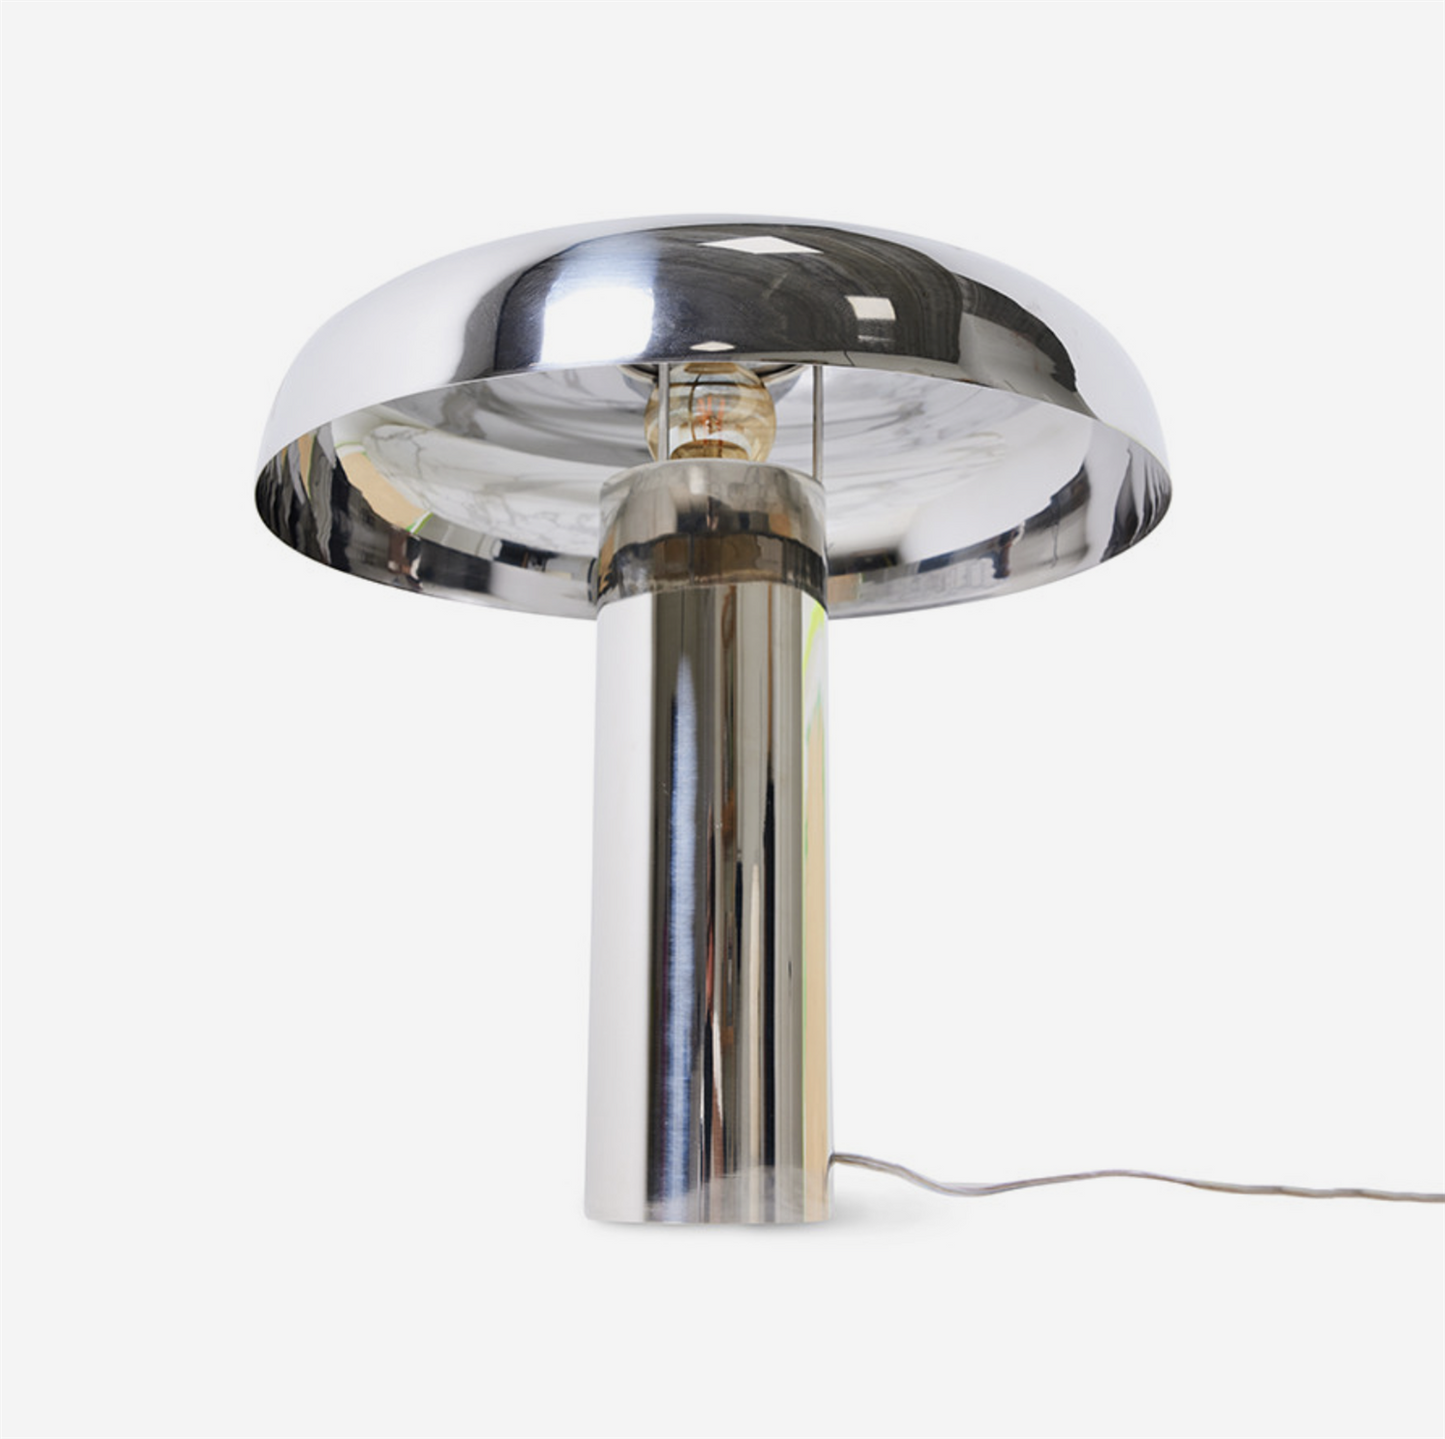 Chrome mushroom Table lamp